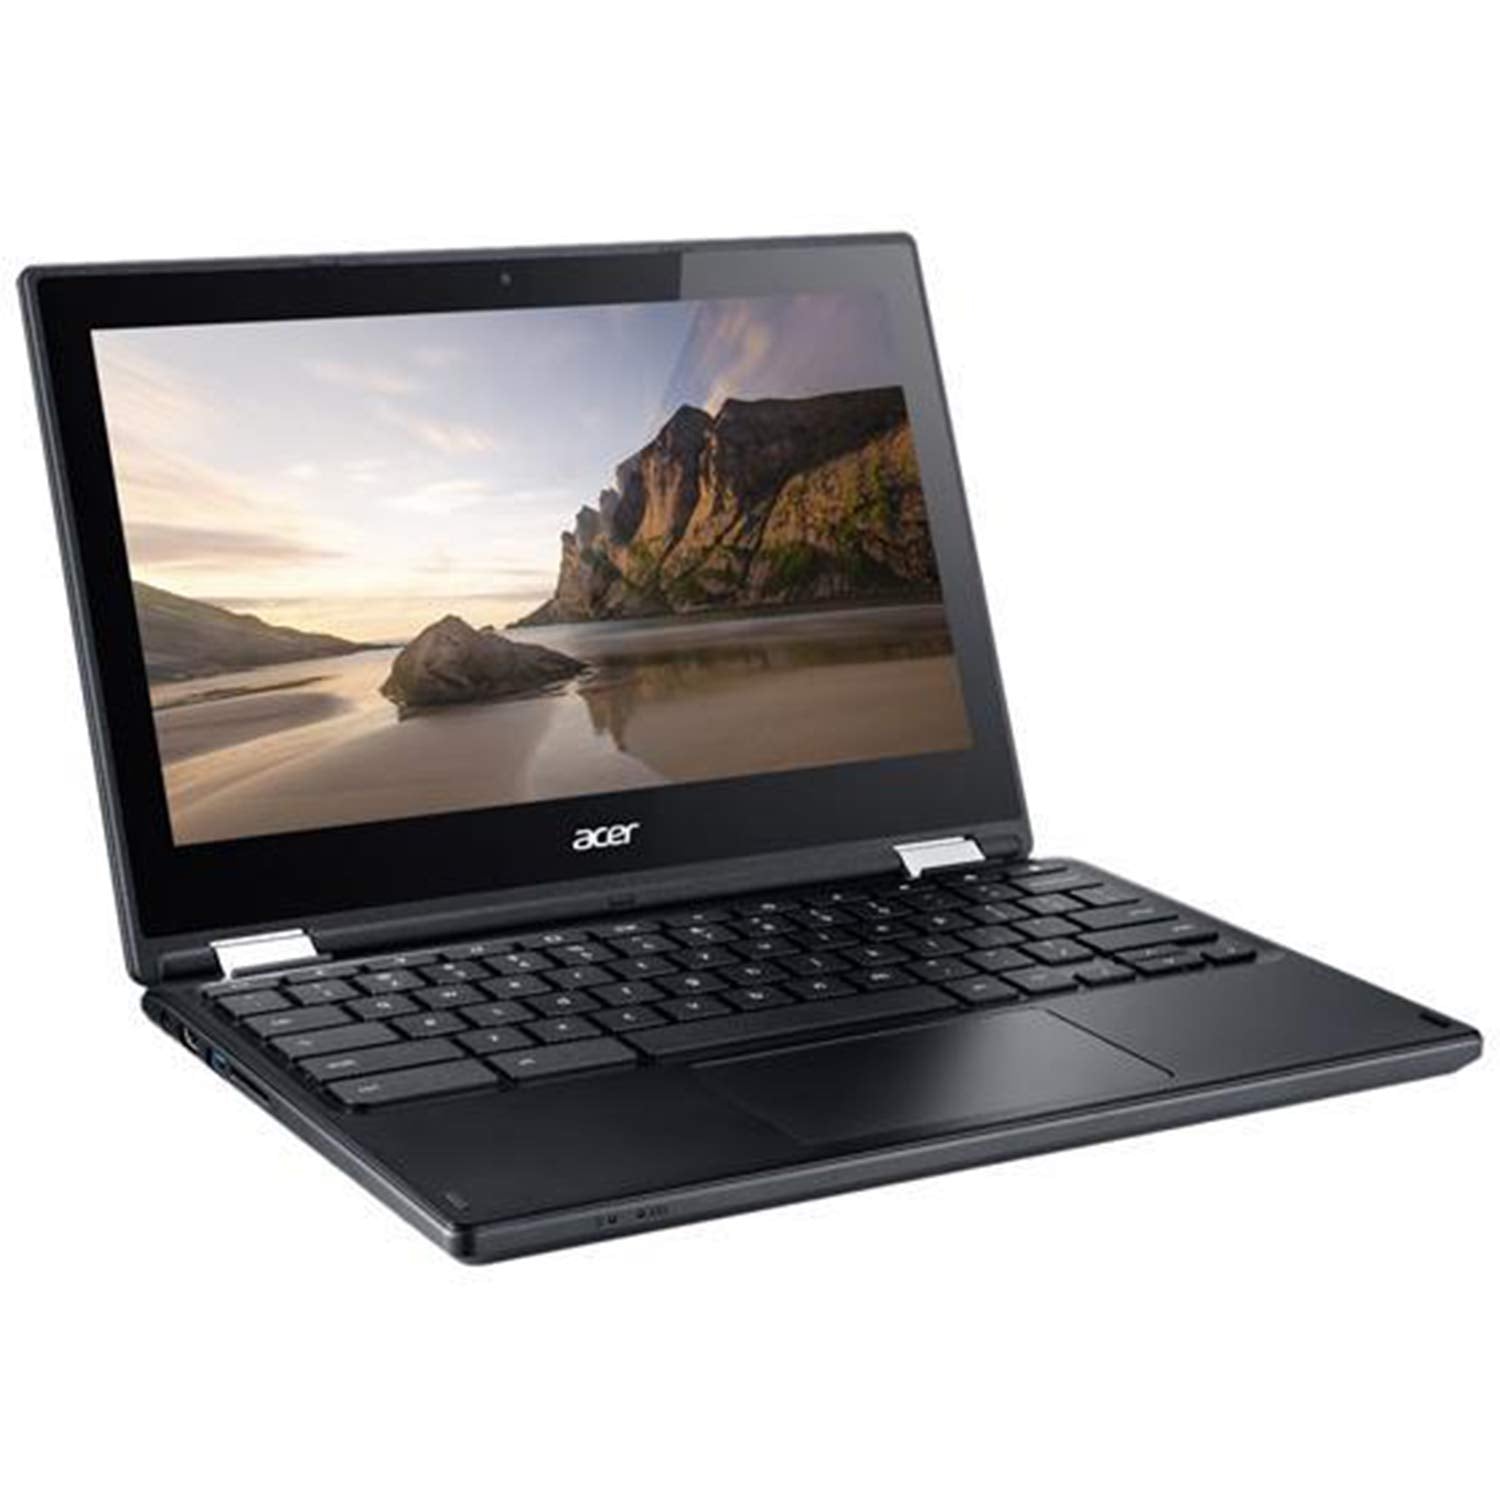 Acer C738T Touchscreen Chromebook C738T-C44Z 4GB RAM Laptop (11.6in) (Renewed)